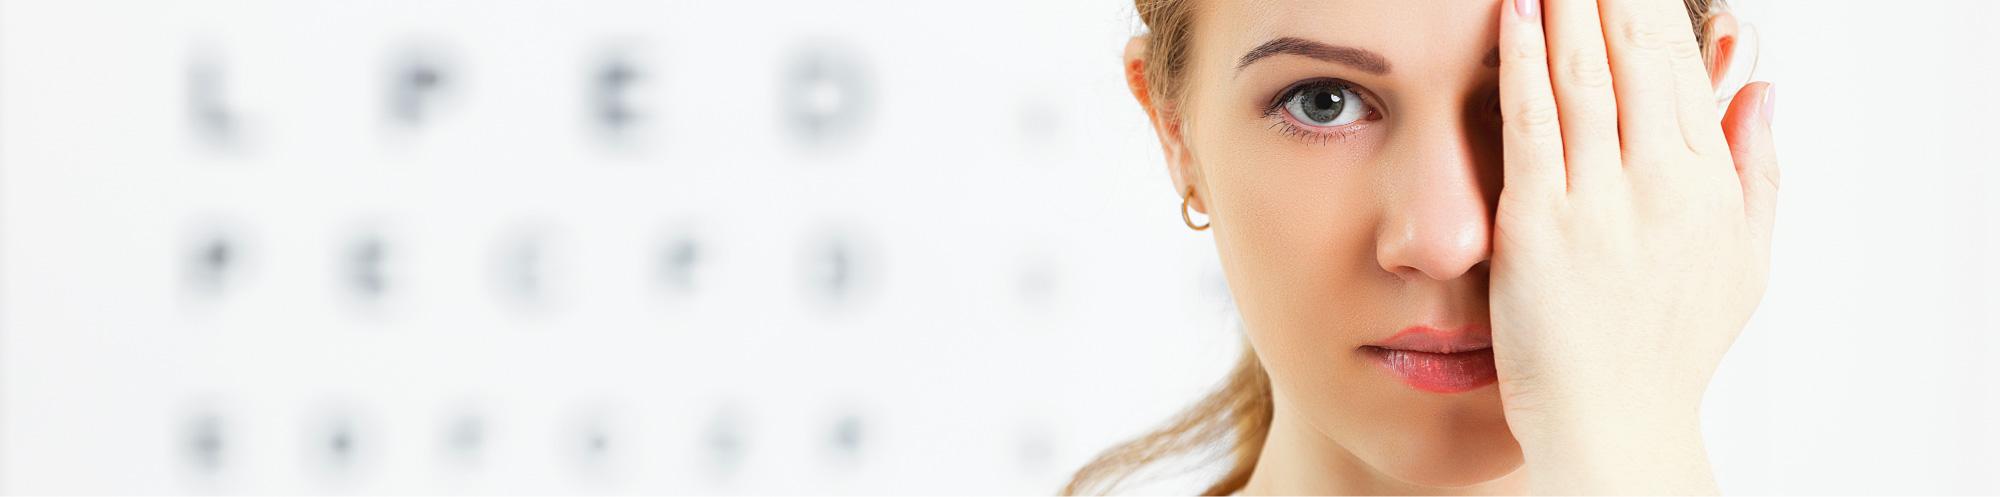 Makuladegeneration - Augenarztpraxis Buchen